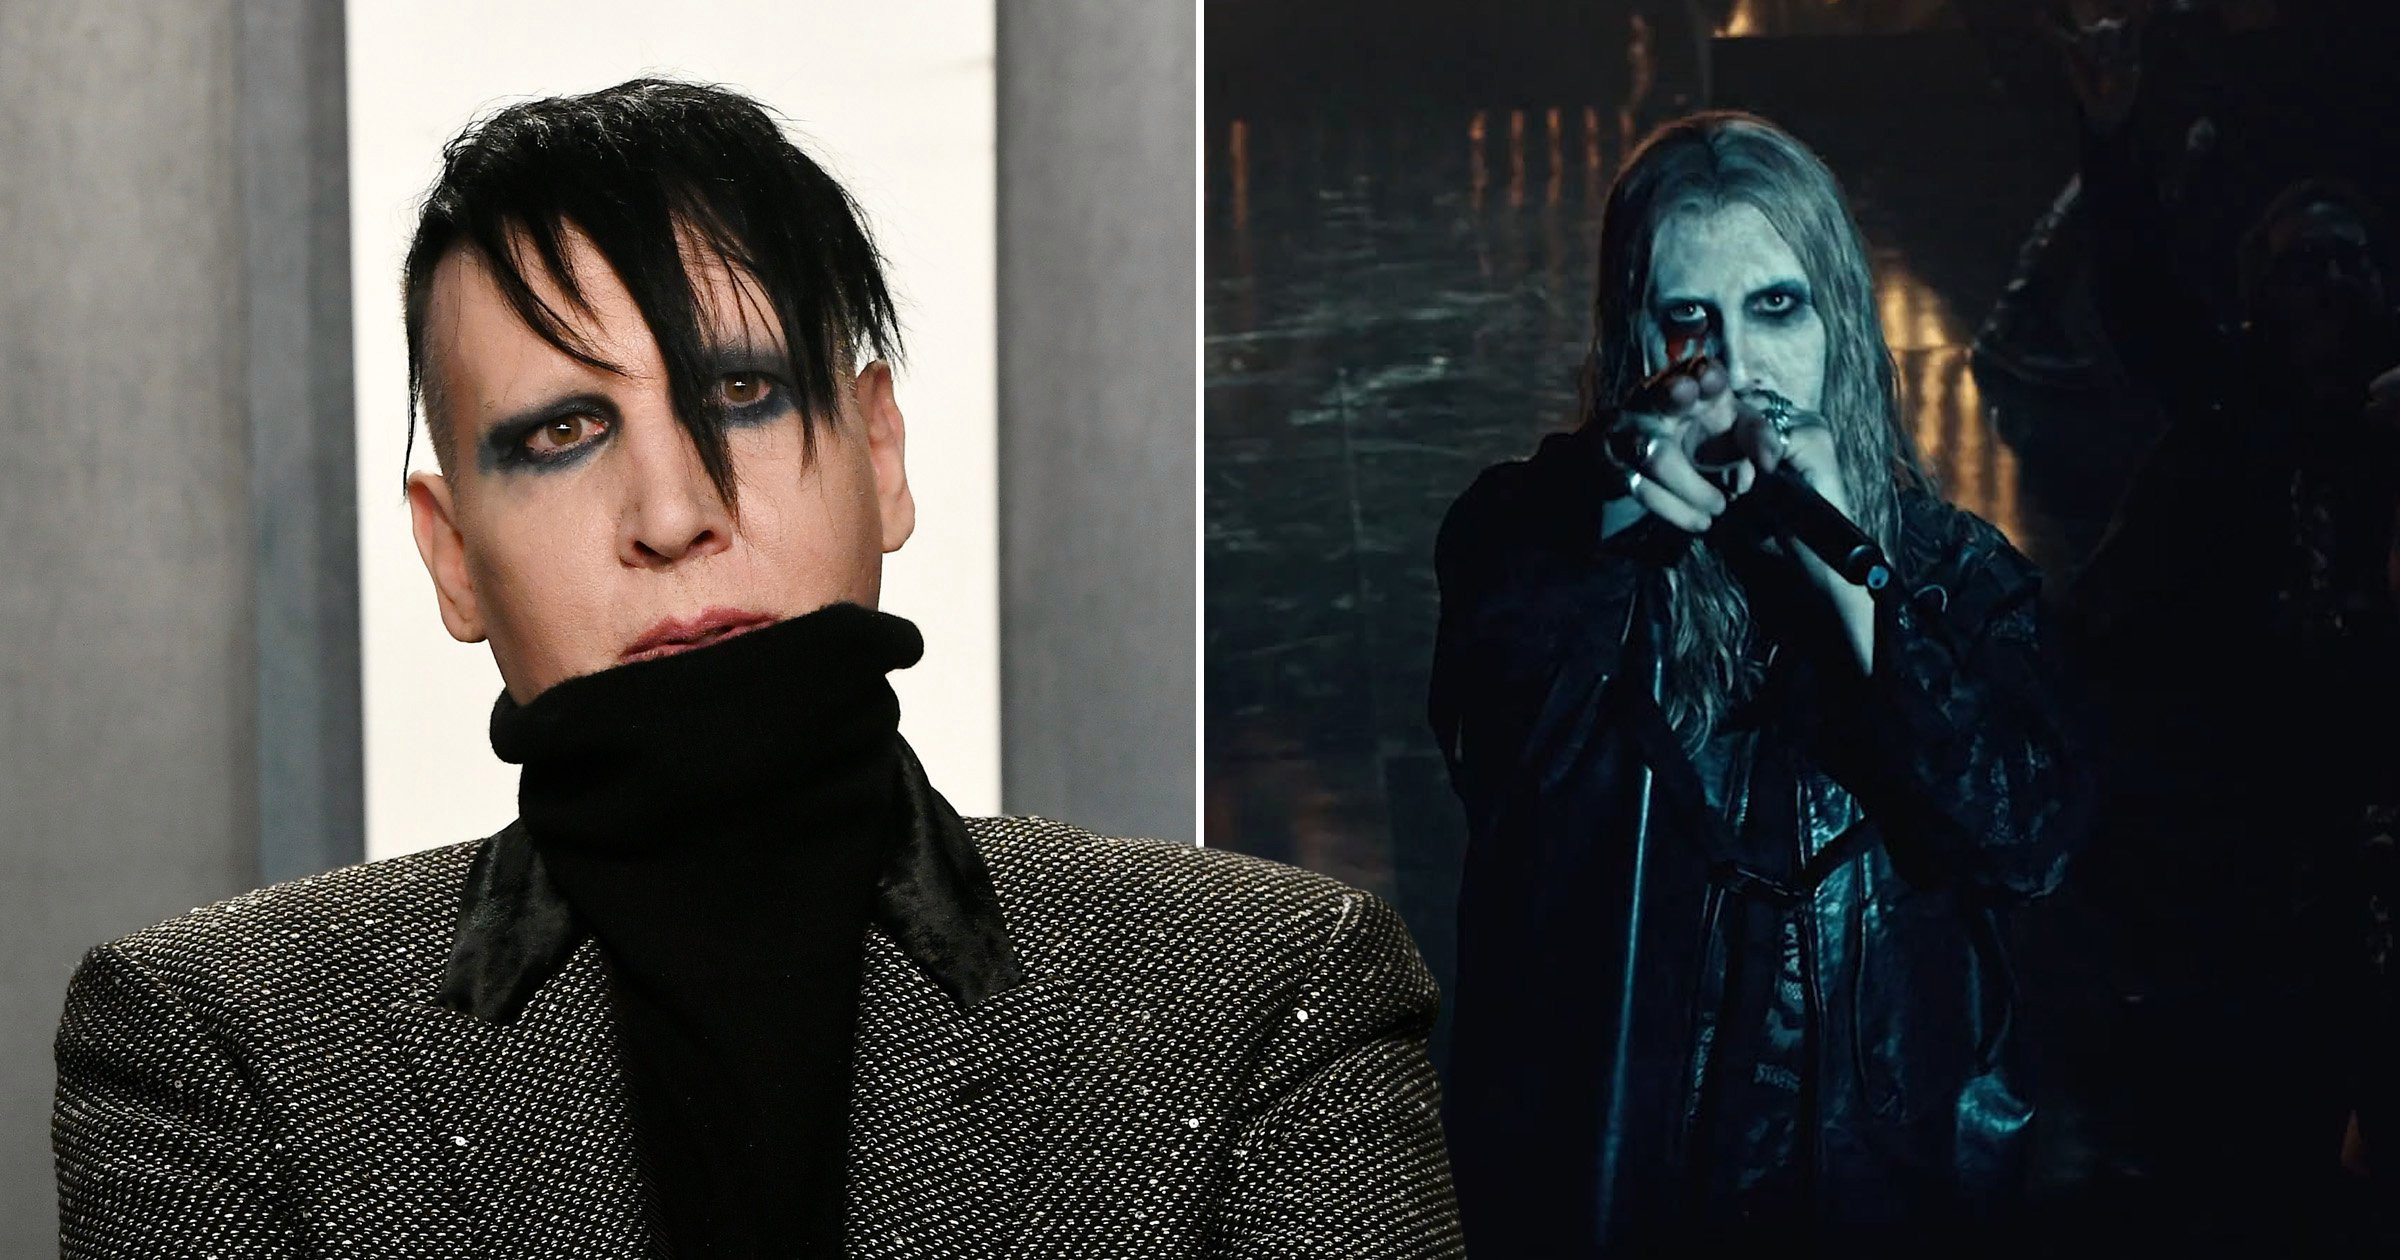 Marilyn Manson axed from American Gods season 3 in light of Evan Rachel Wood abuse allegations